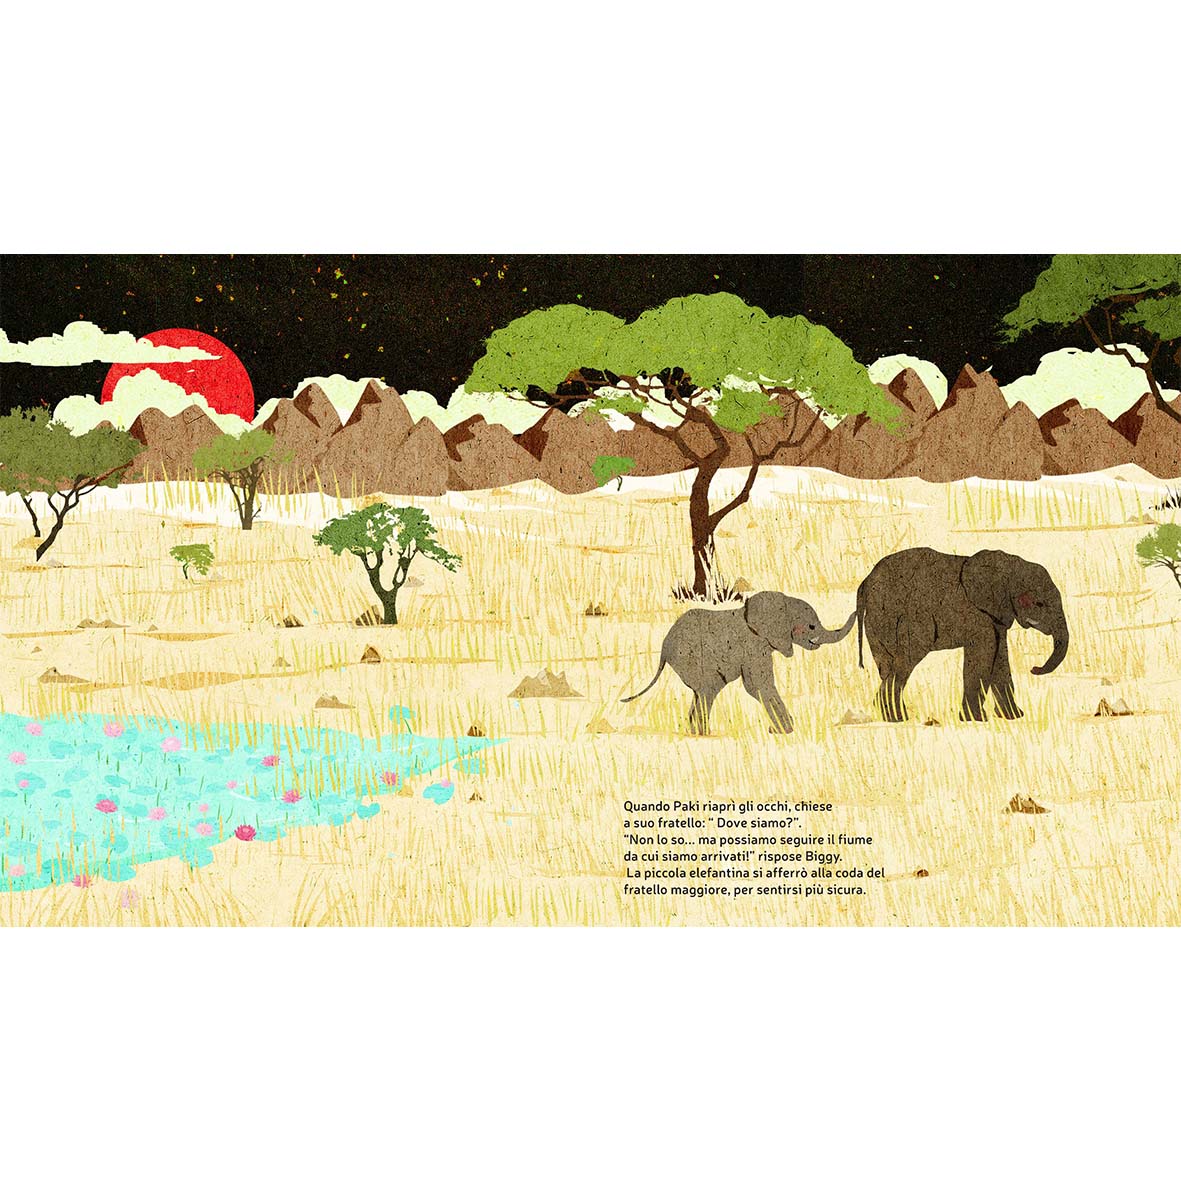 Paki e Biggy - elefanti nella savana